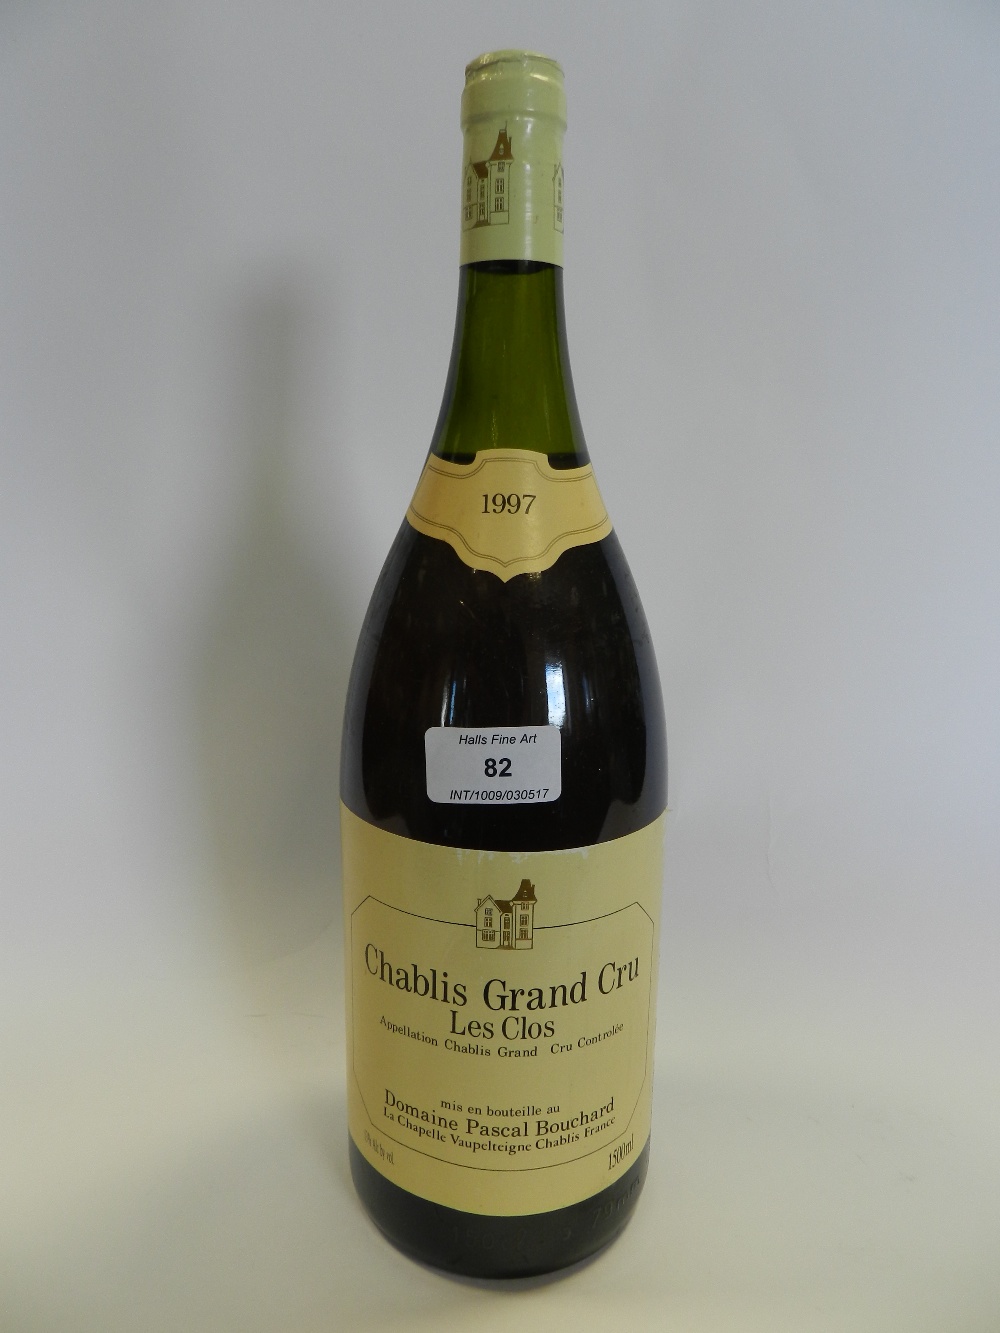 One bottle of Chablis Gran Cru les Clos,